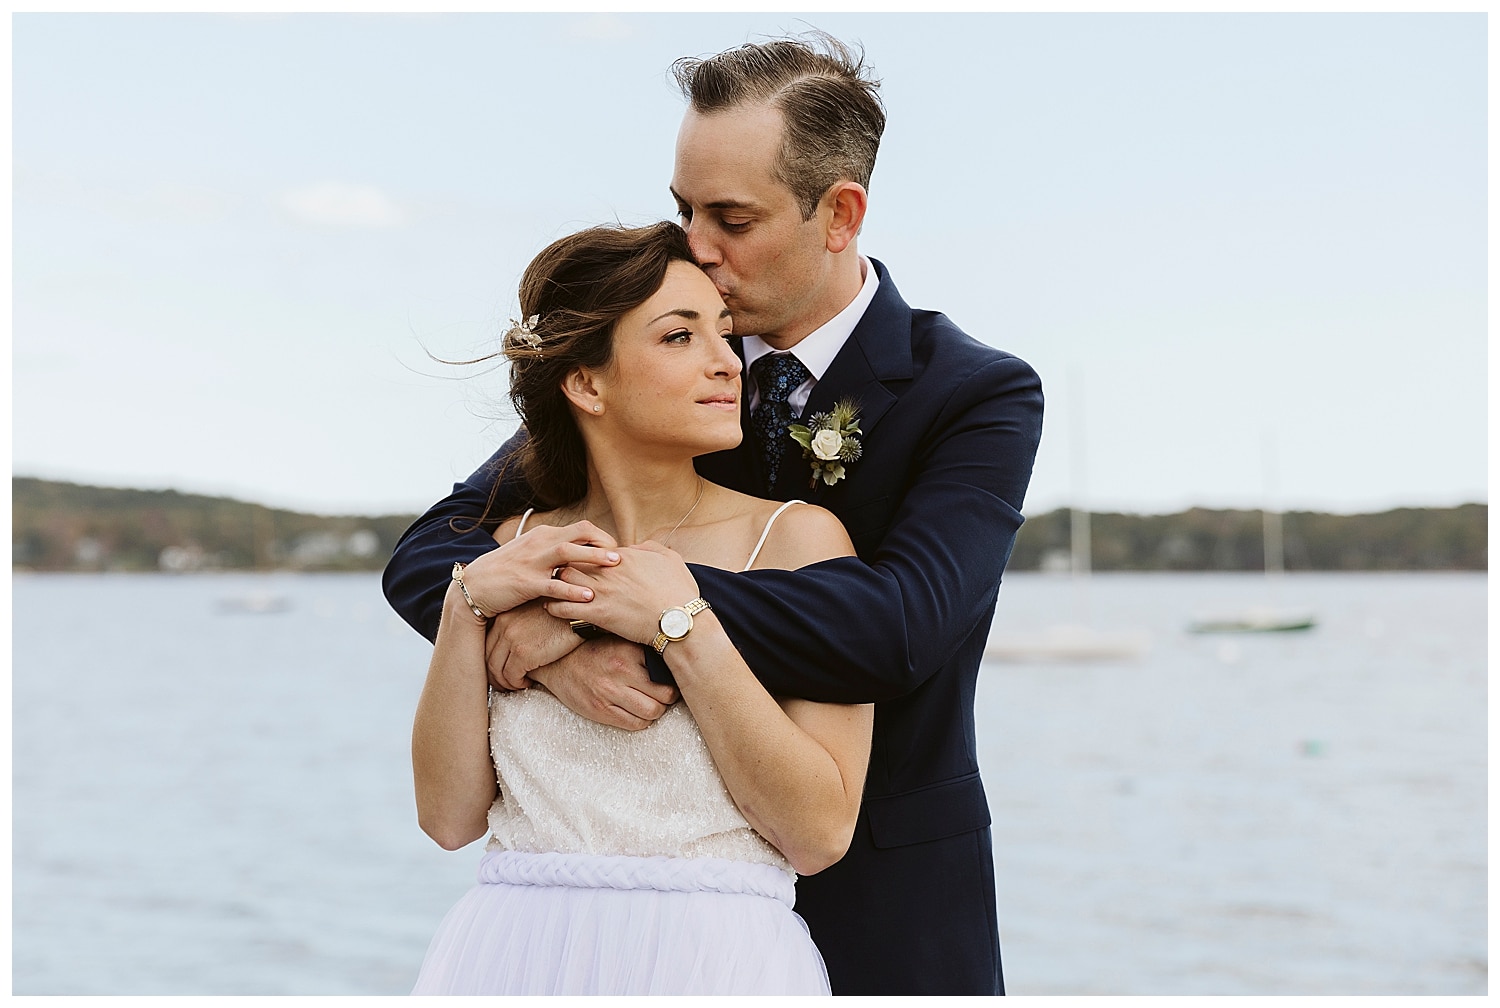 broom kissing bride's head at Boothbay Harbor, Maine wedding at Linekin Bay Resort